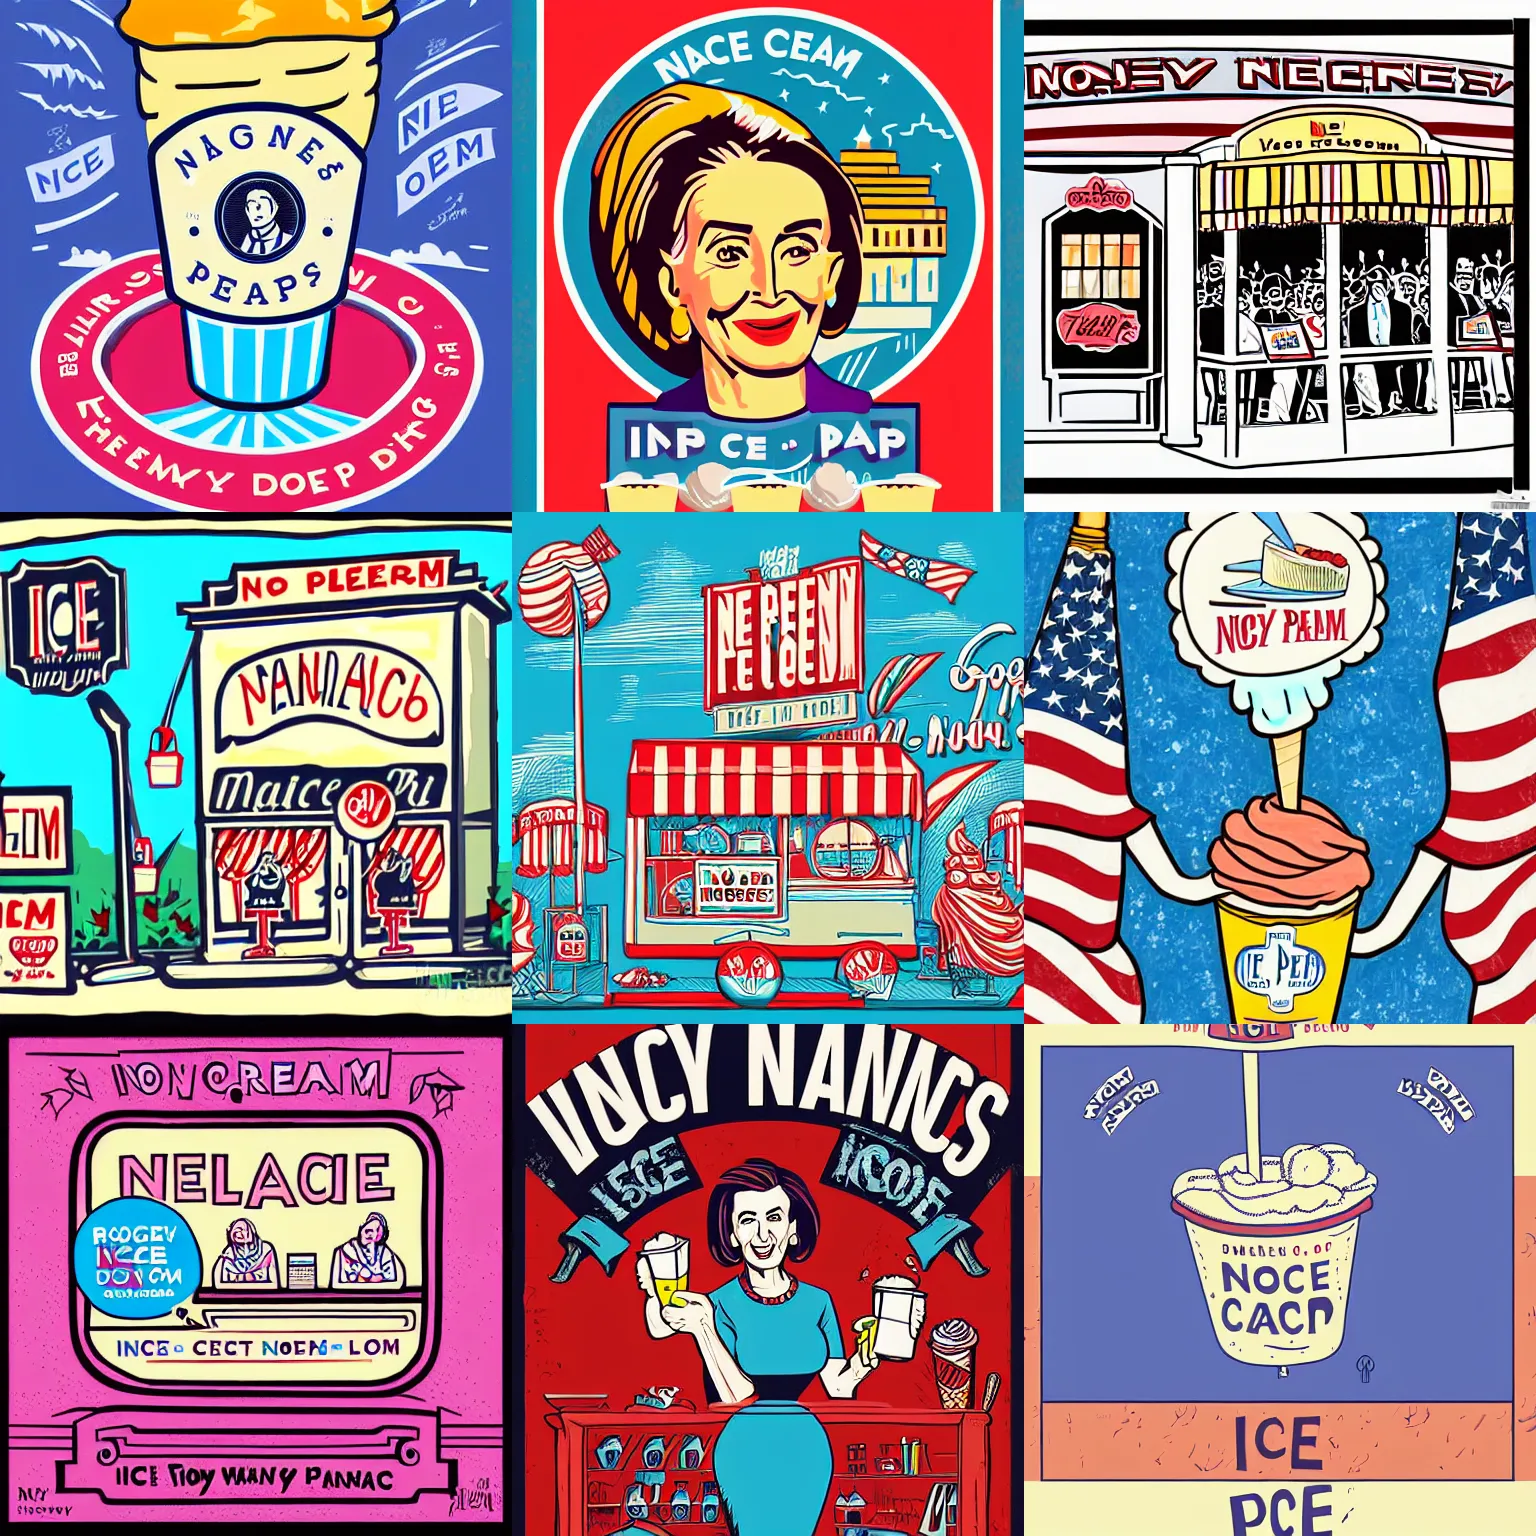 Prompt: nancy pelosi ice cream shop, intricate propaganda illustration by tim doyle